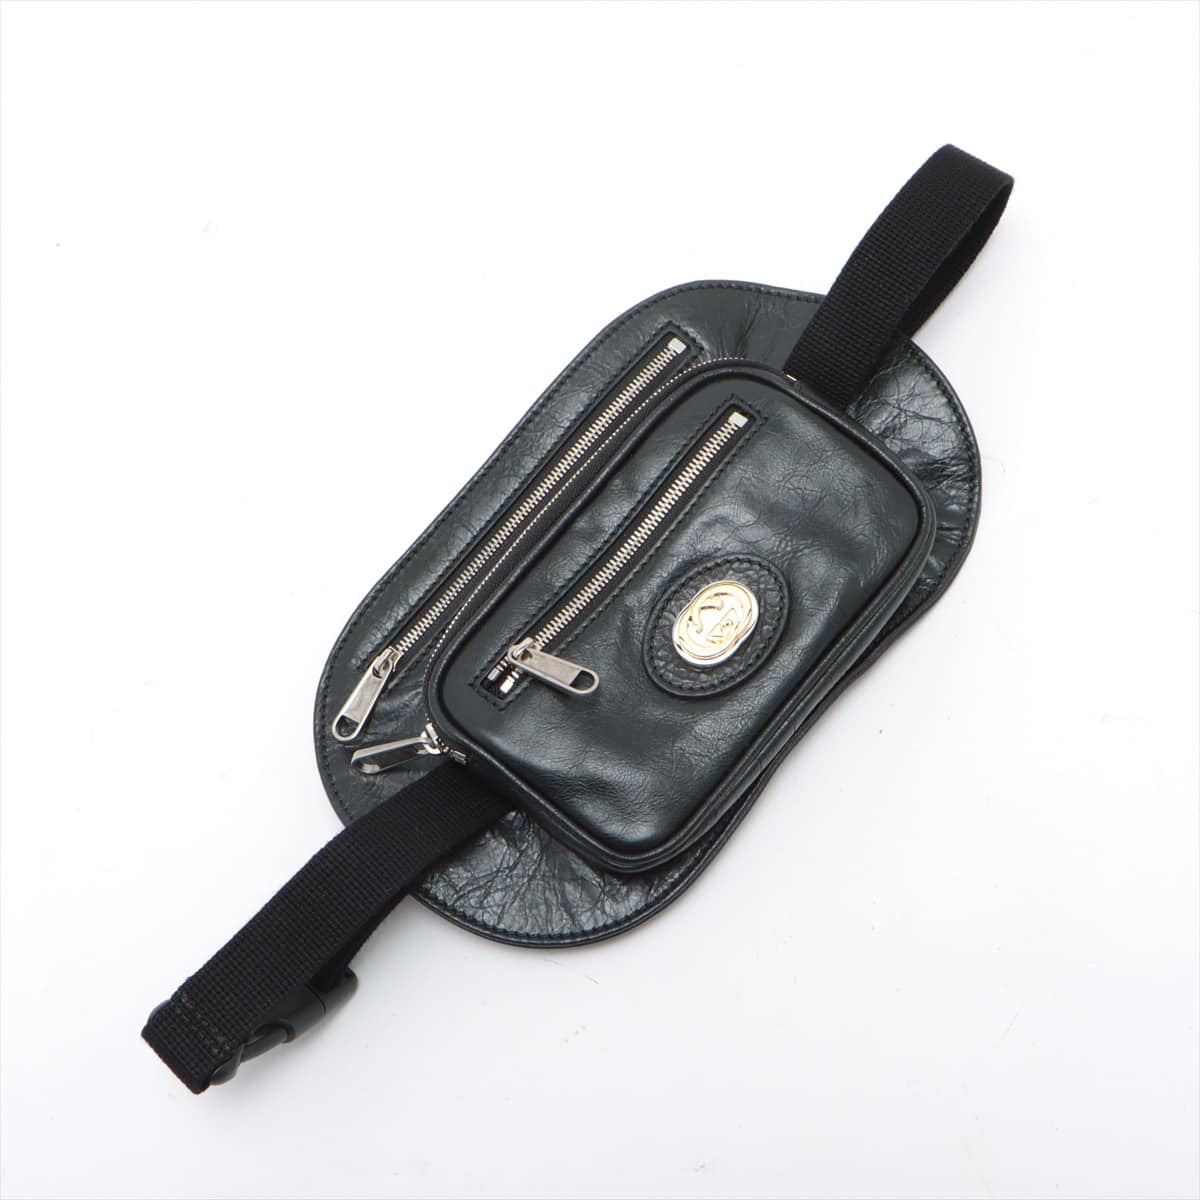 Gucci Interlocking G Leather Sling backpack Black 575857